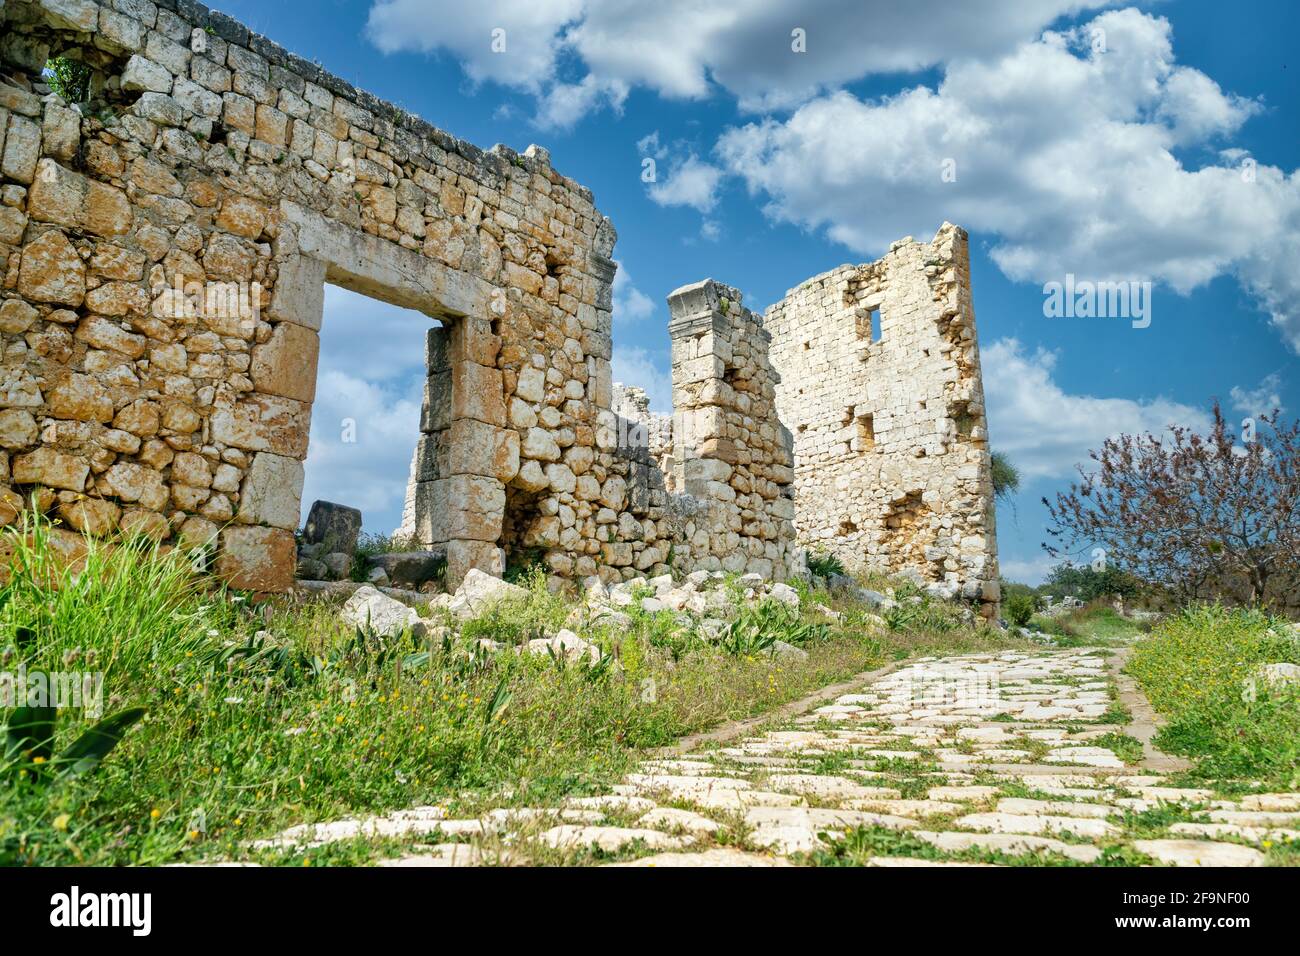 Ruins From Kanlidivane (Canytelis), Mersin, Turkey Stock Photo